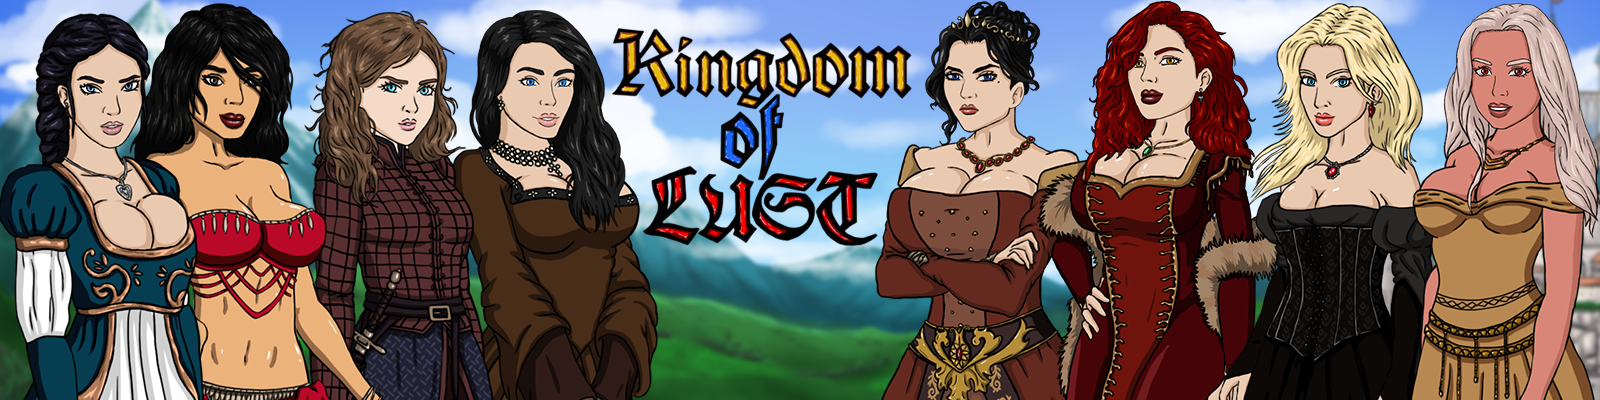 Kingdom of Lust v0.3.1